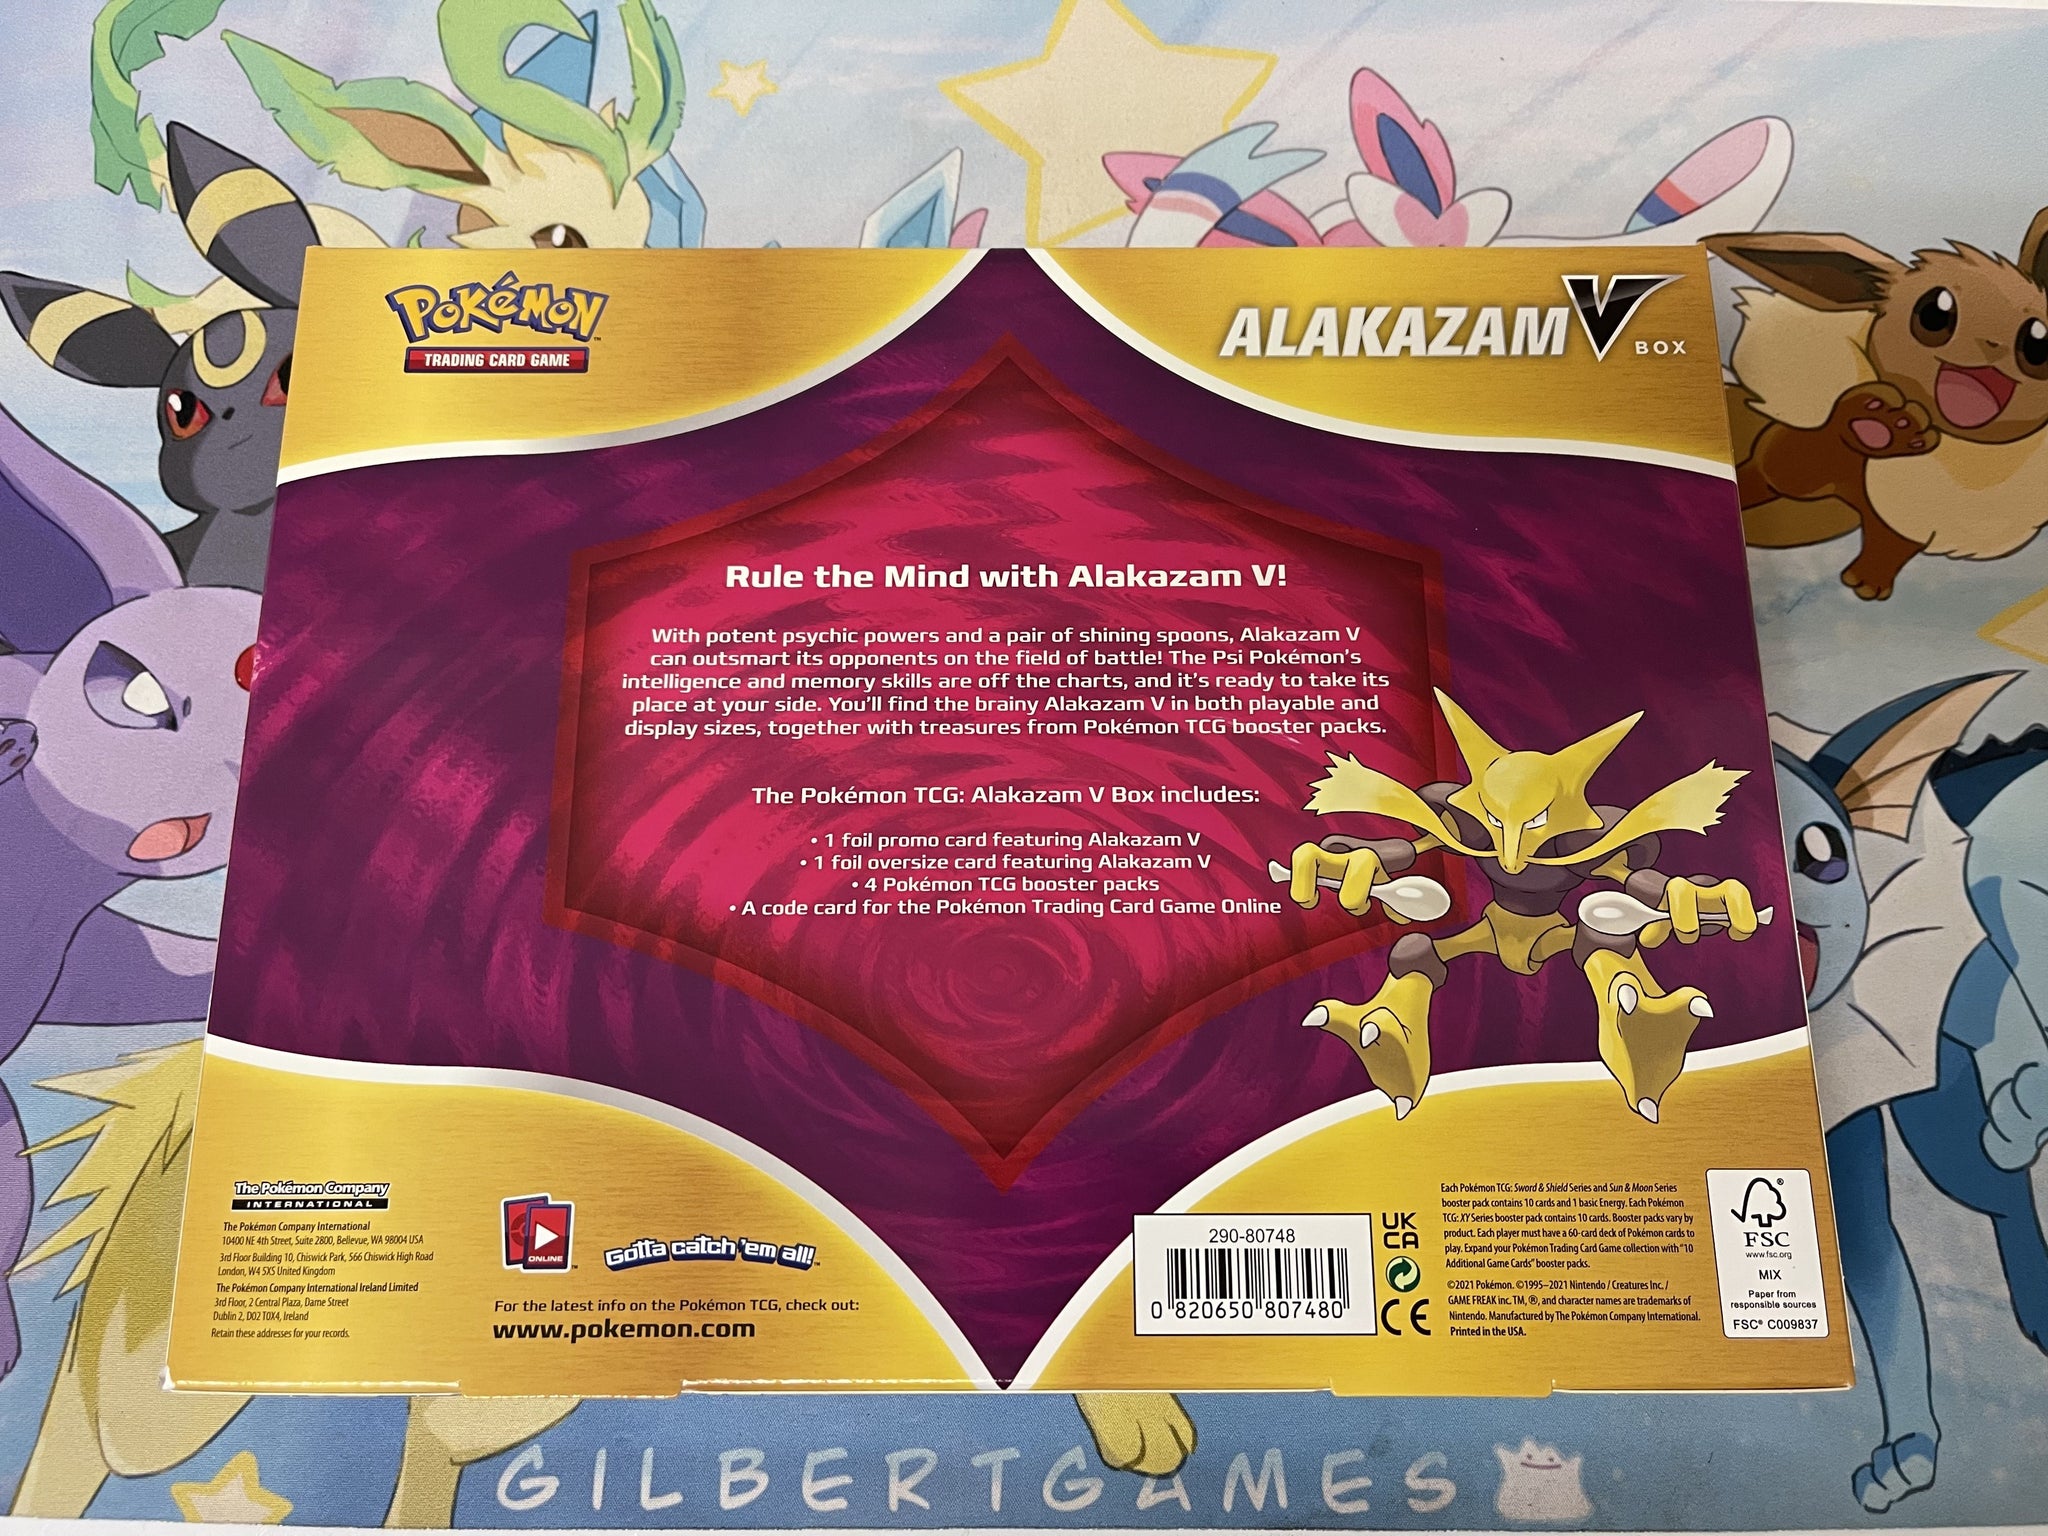 Alakazam V, Pokémon